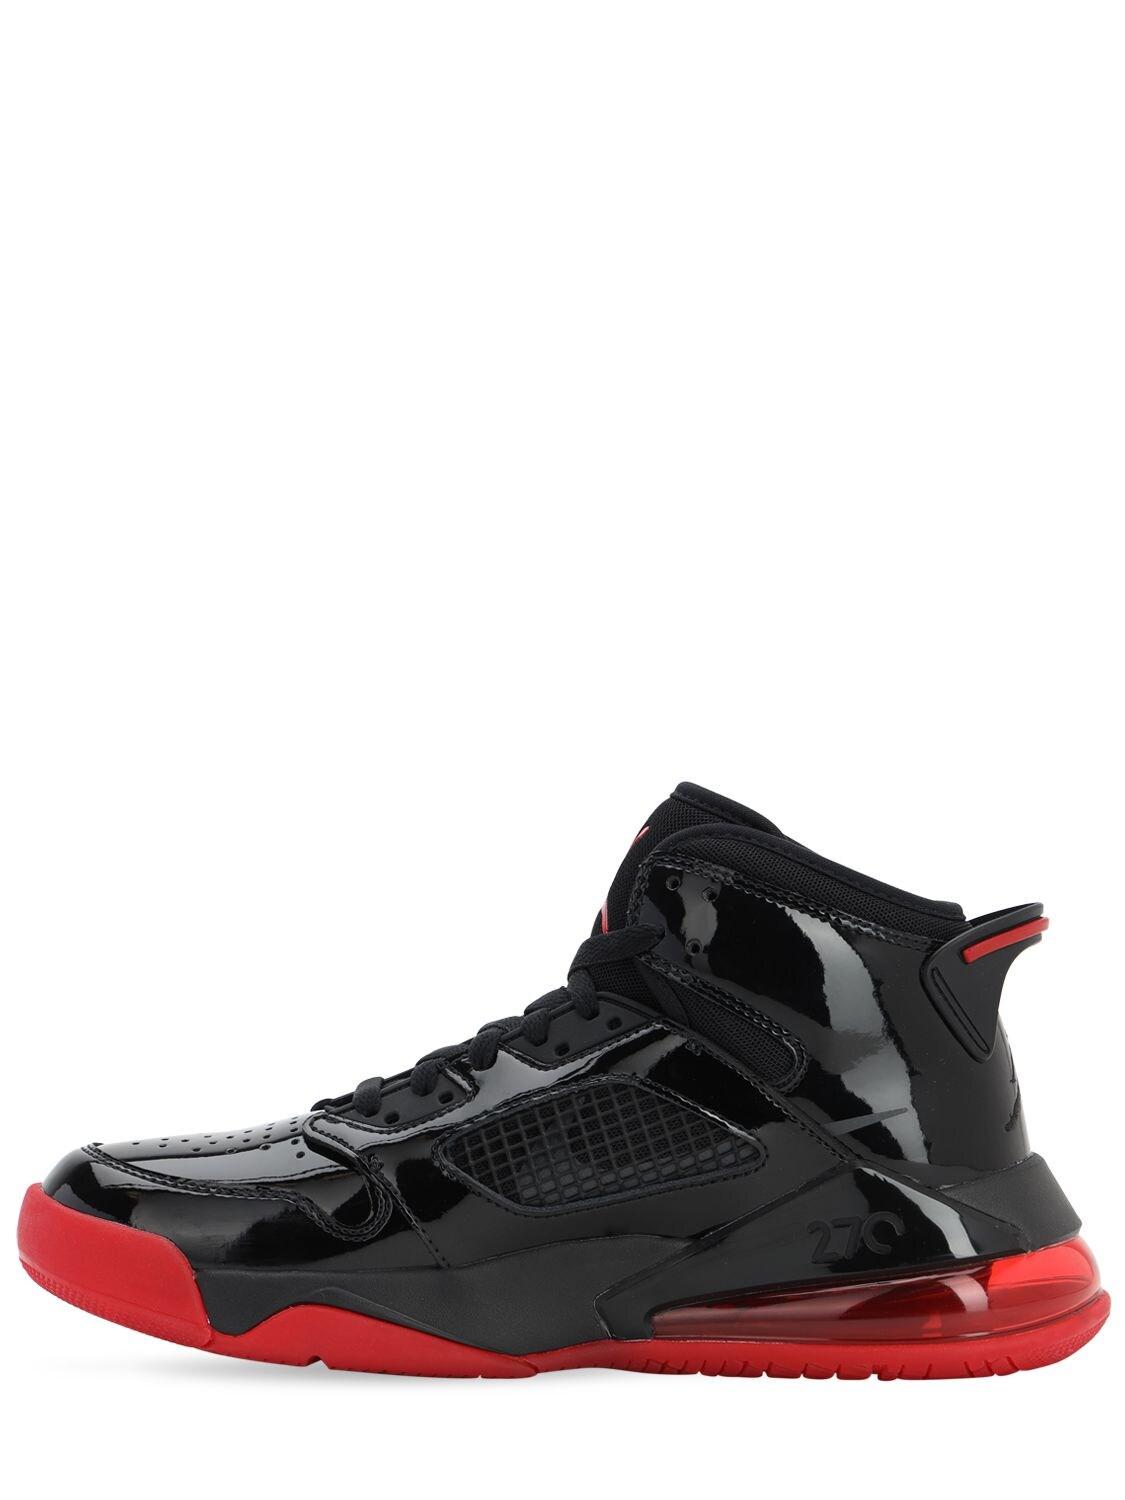 Nike Jordan Mars 270 Shoe in Black, Silver & Red (Black) for Men | Lyst